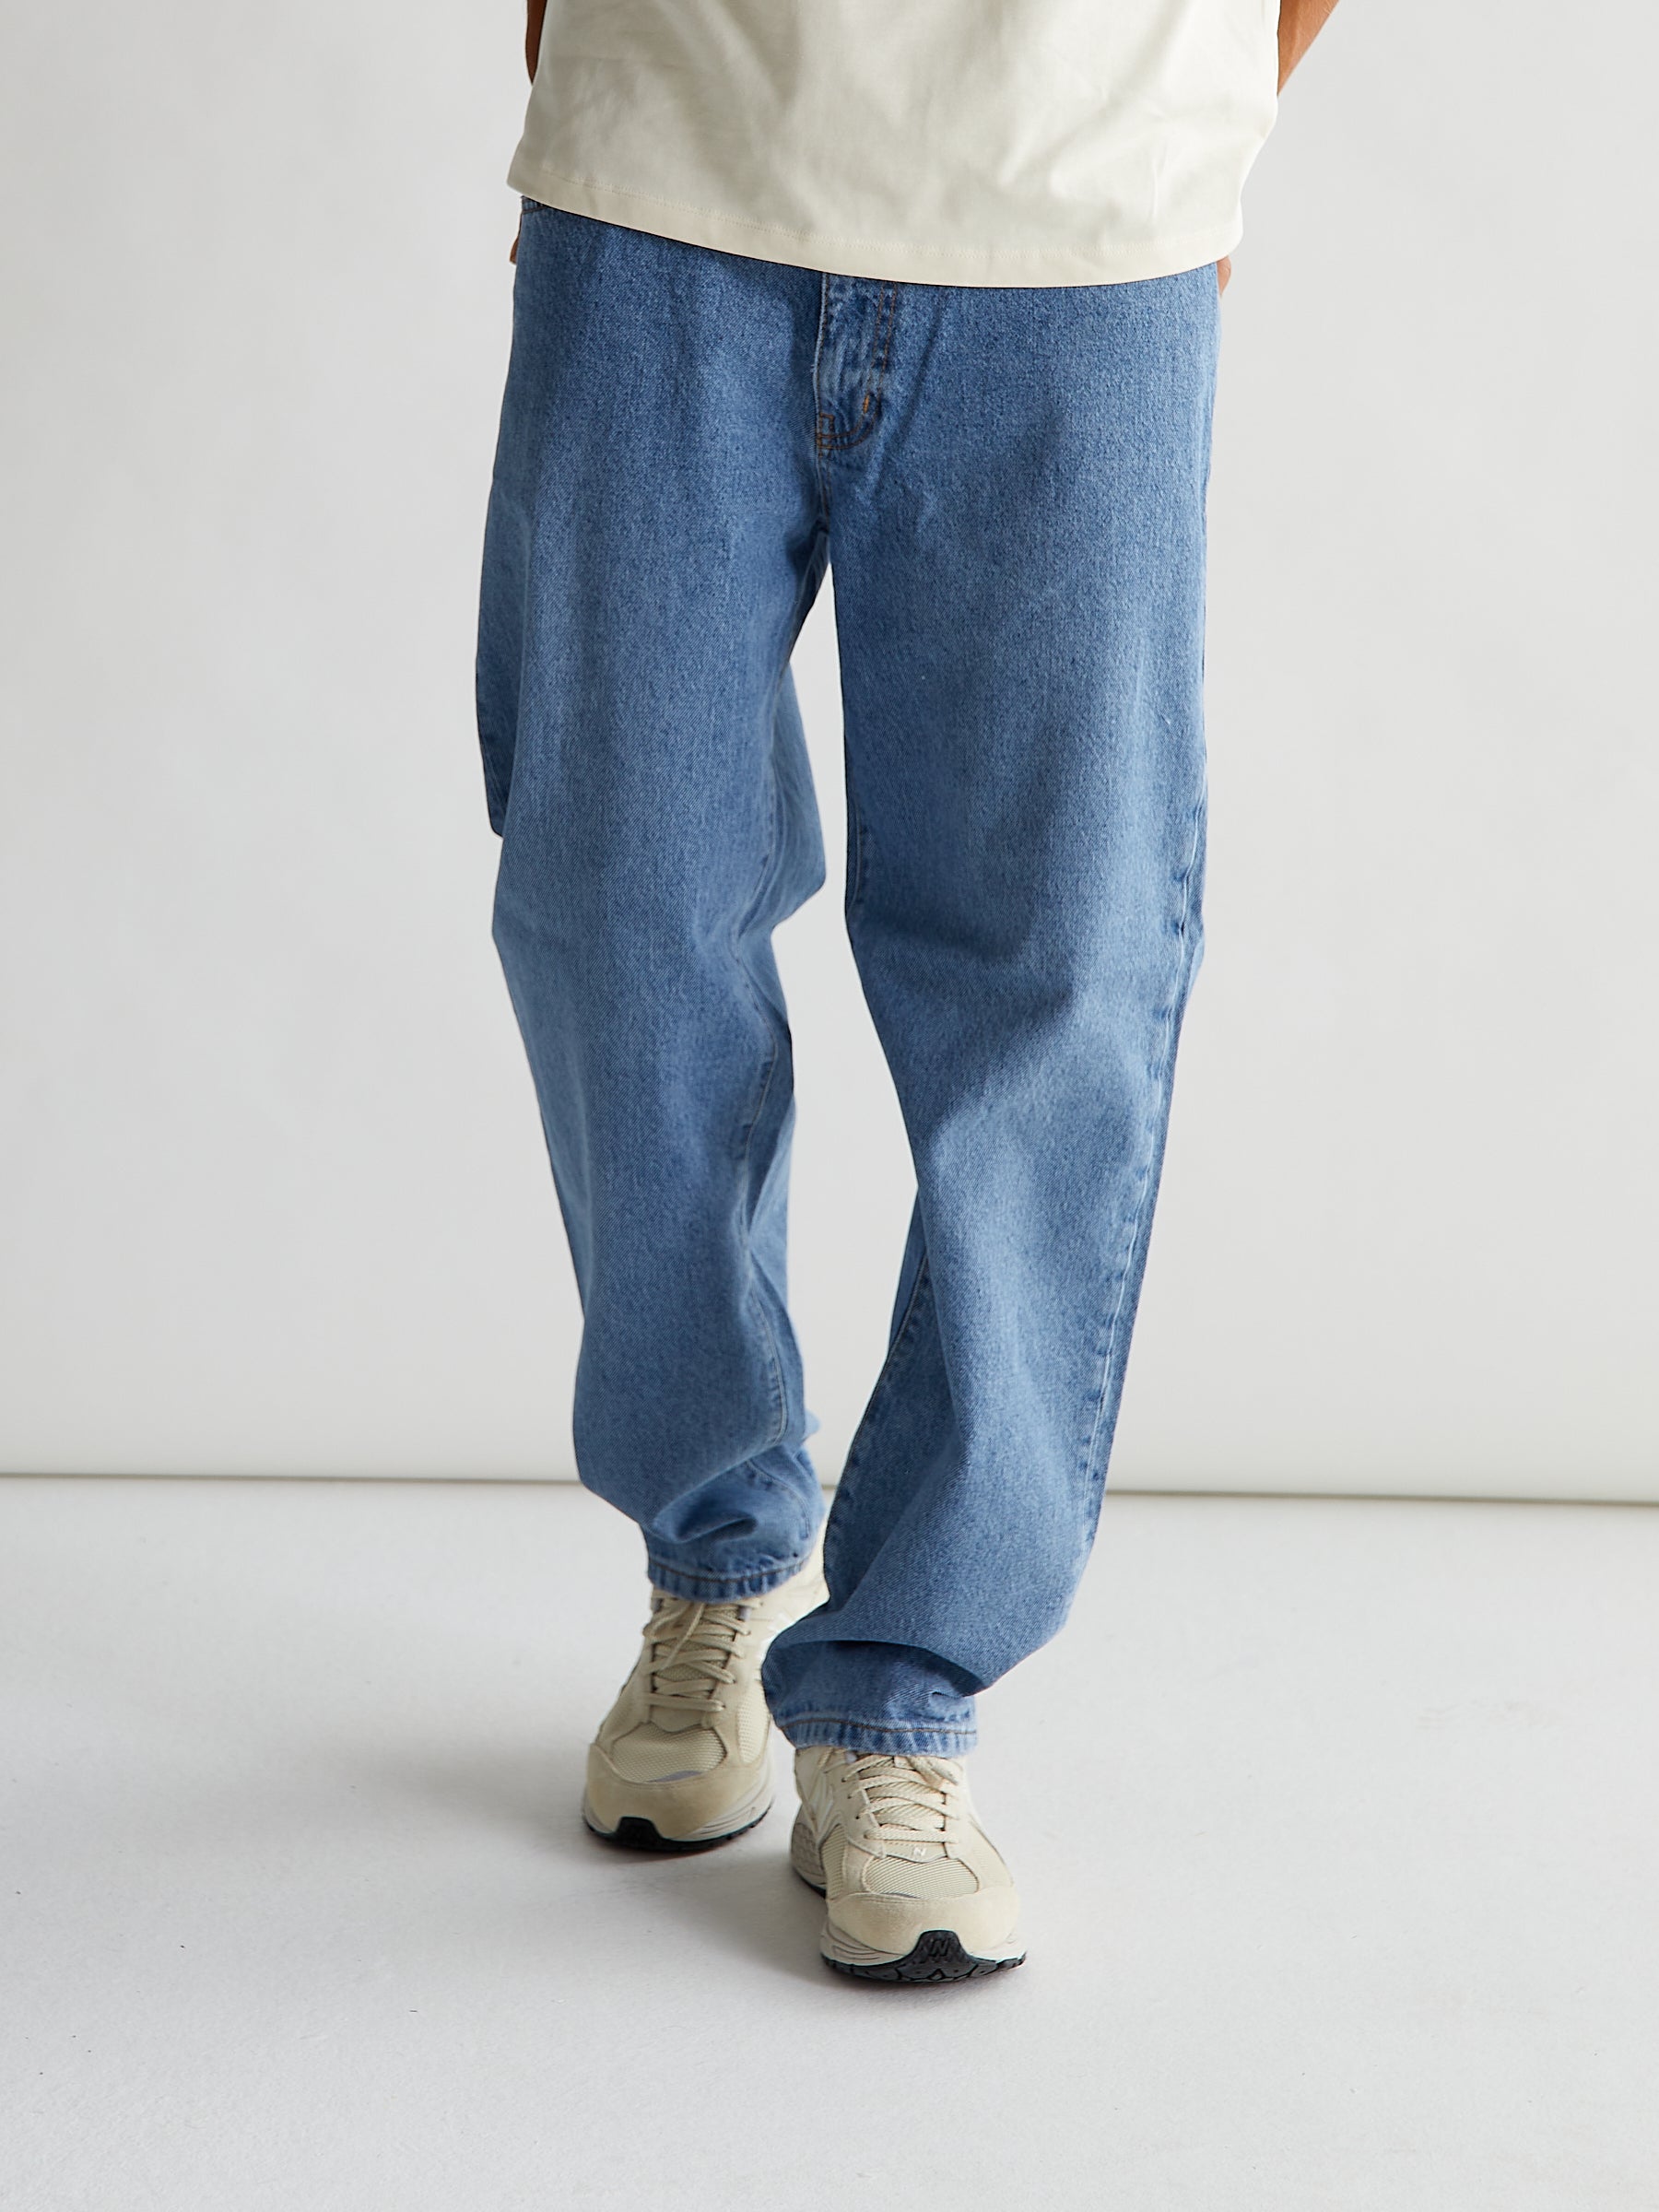 Leroy Doone Jeans Washed Blue